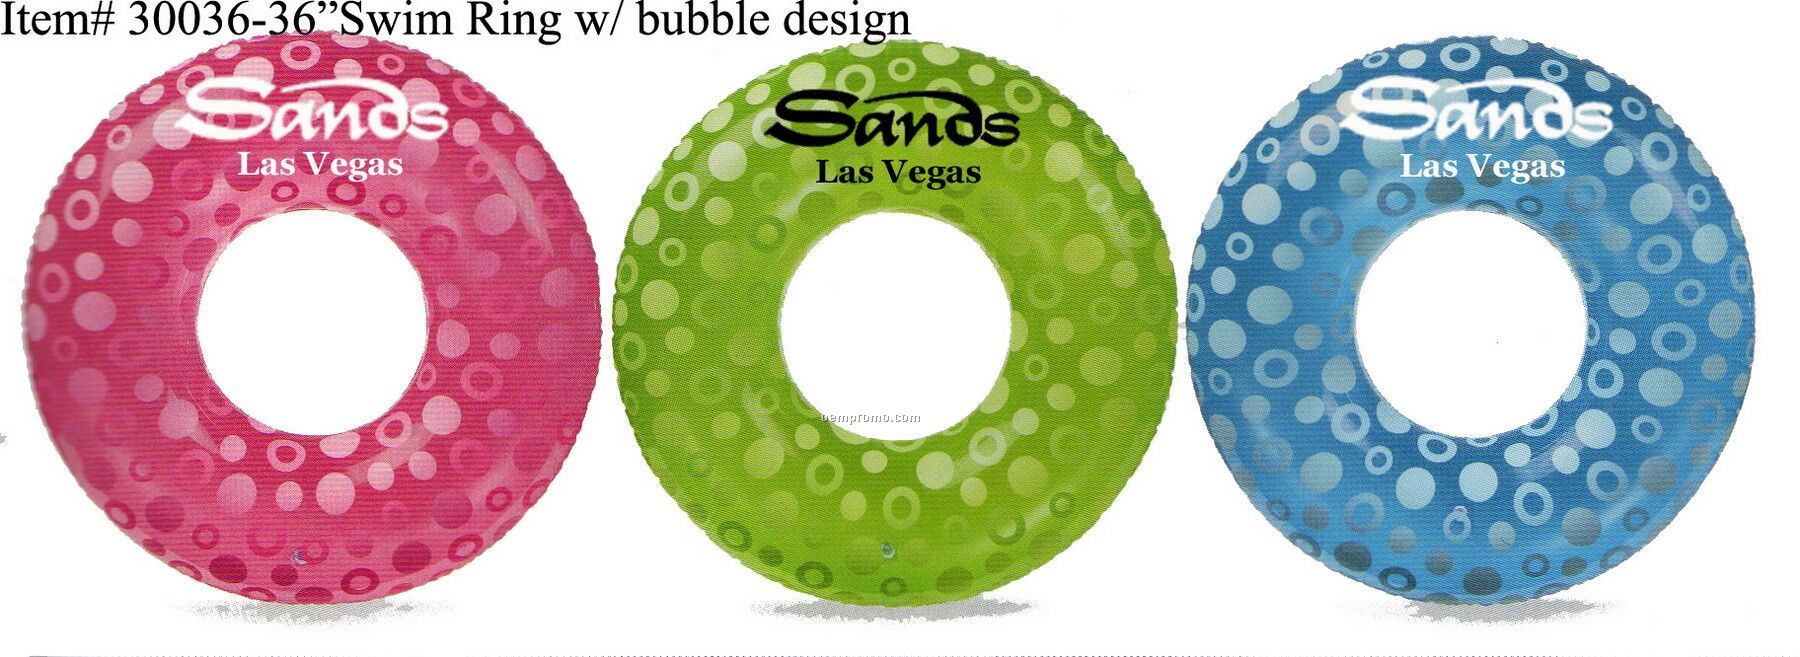 36" Swim Rings W/ Bubble Design